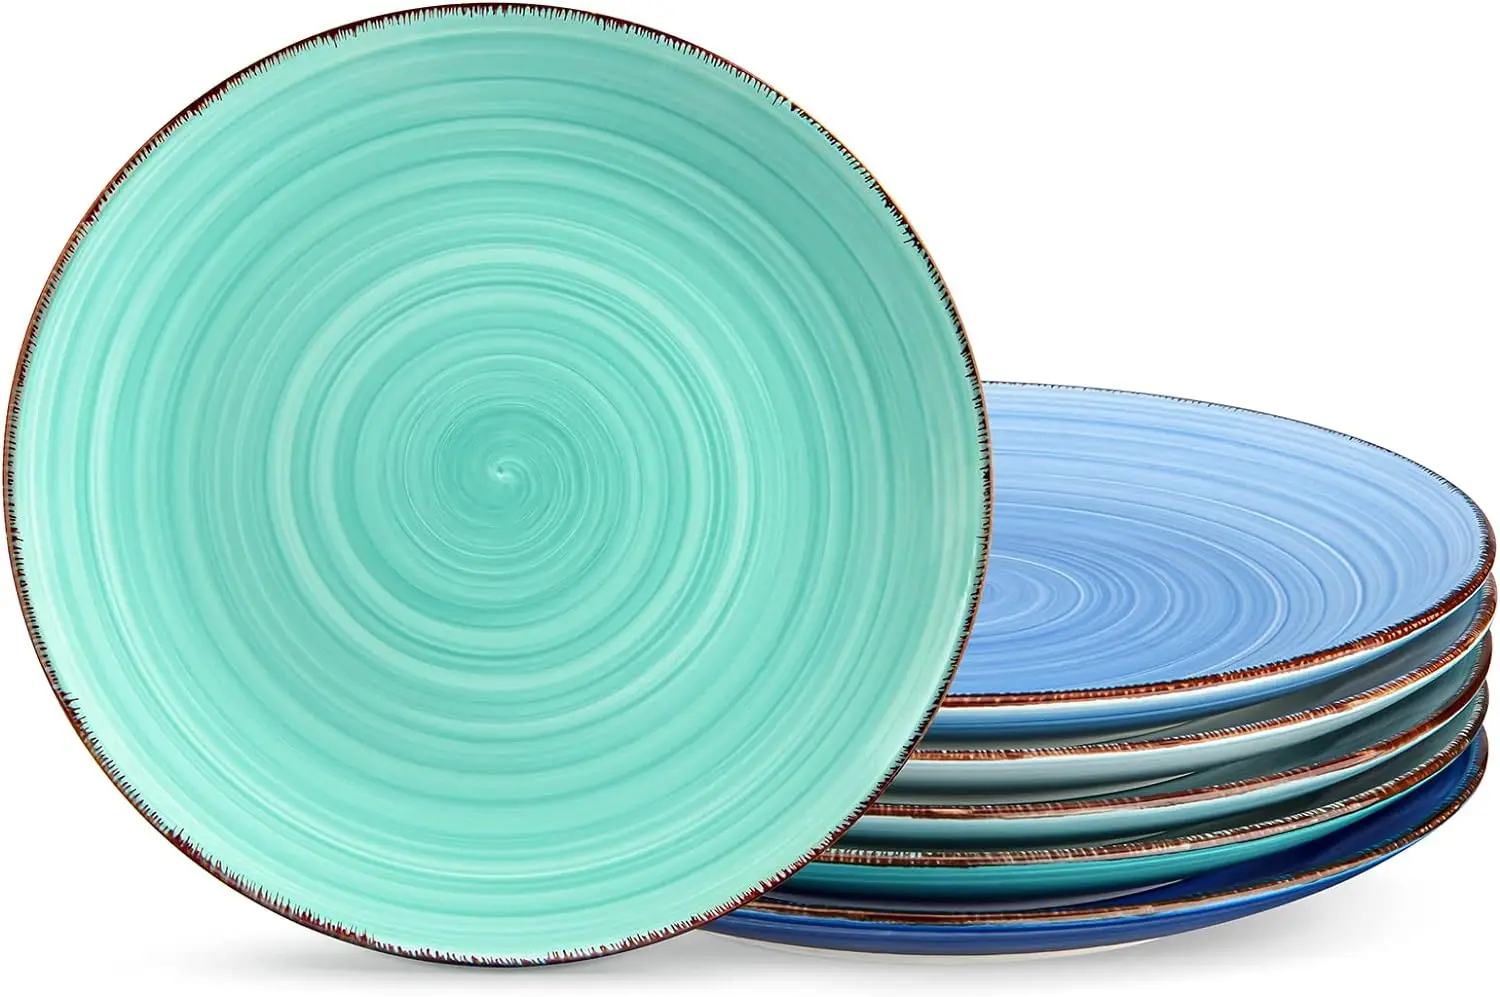 

vancasso Bonita Dinner Plate Set, 10.5 Inch Ceramic Plates, Colorful Salad Plates set of 6, Microwave Oven and Dishwasher Safe,